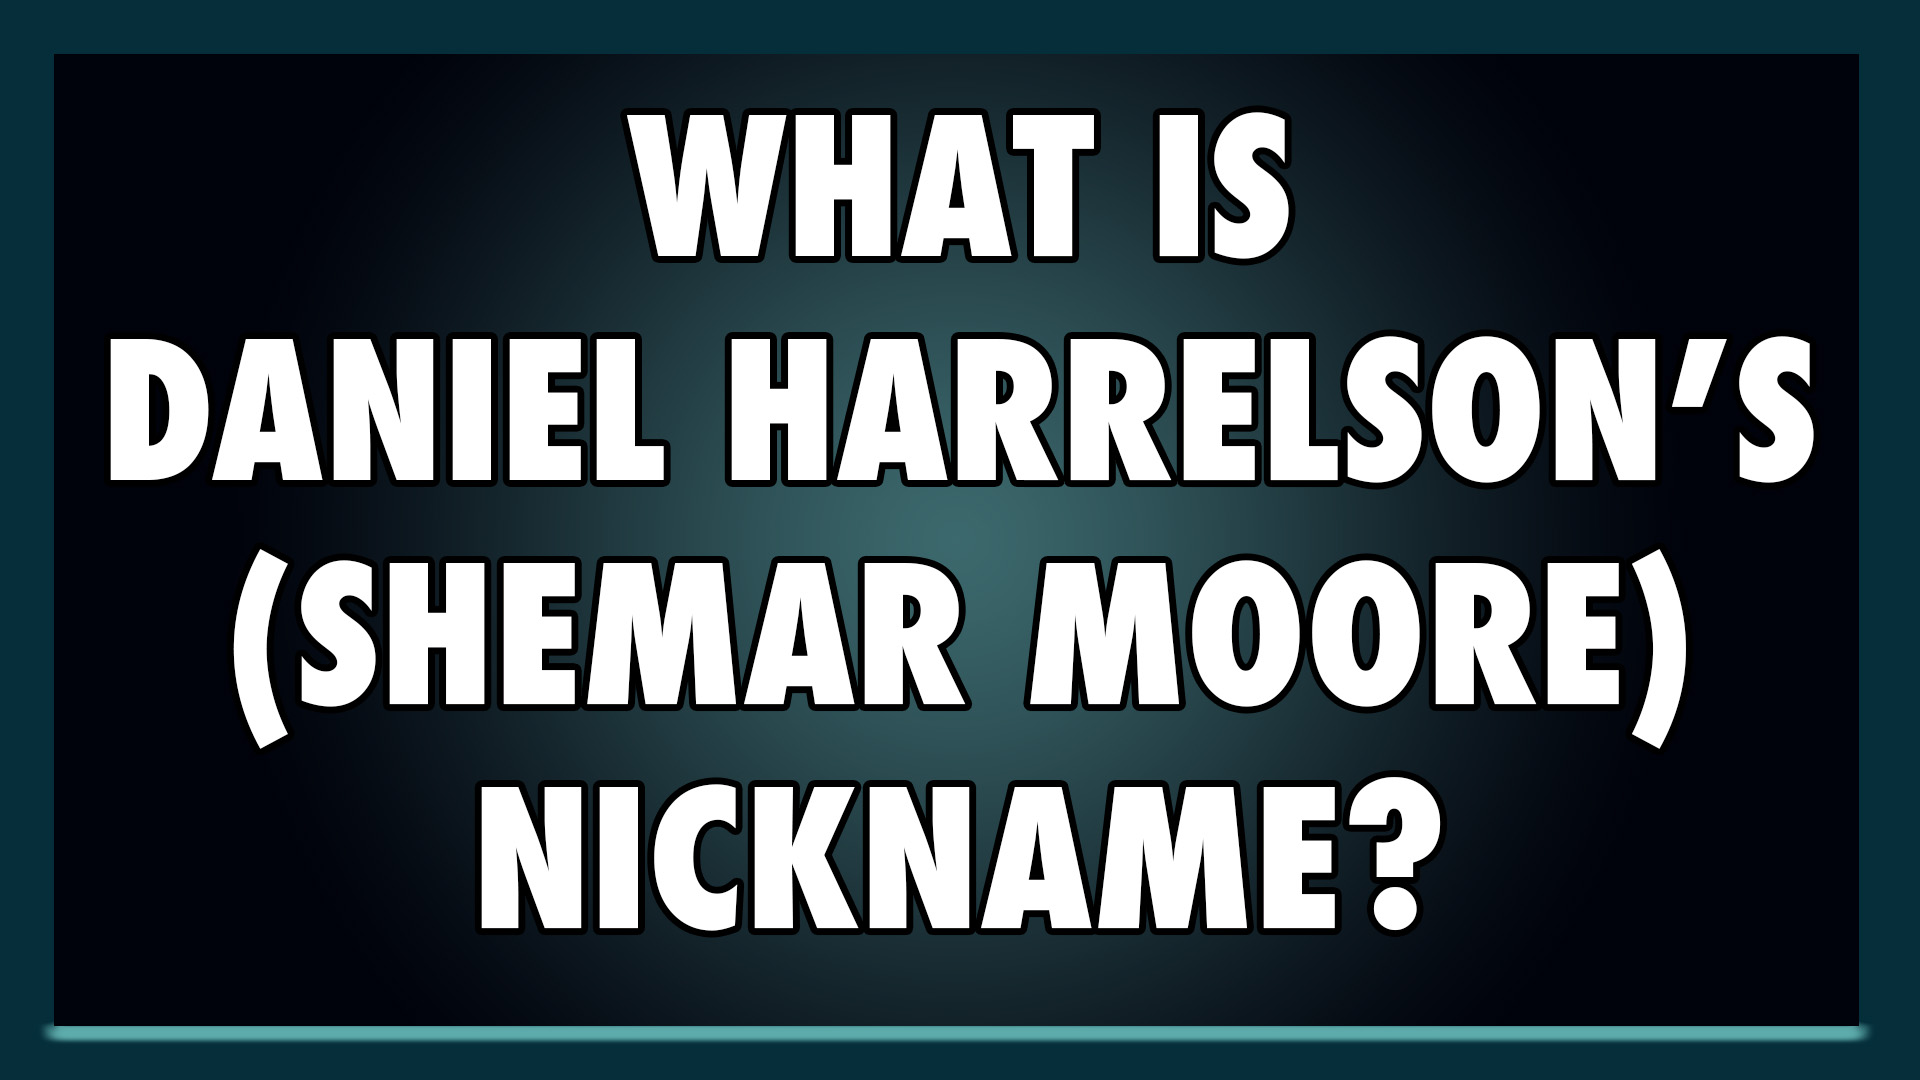 What is Daniel Harrelson's (Shemar Moore) nickname?